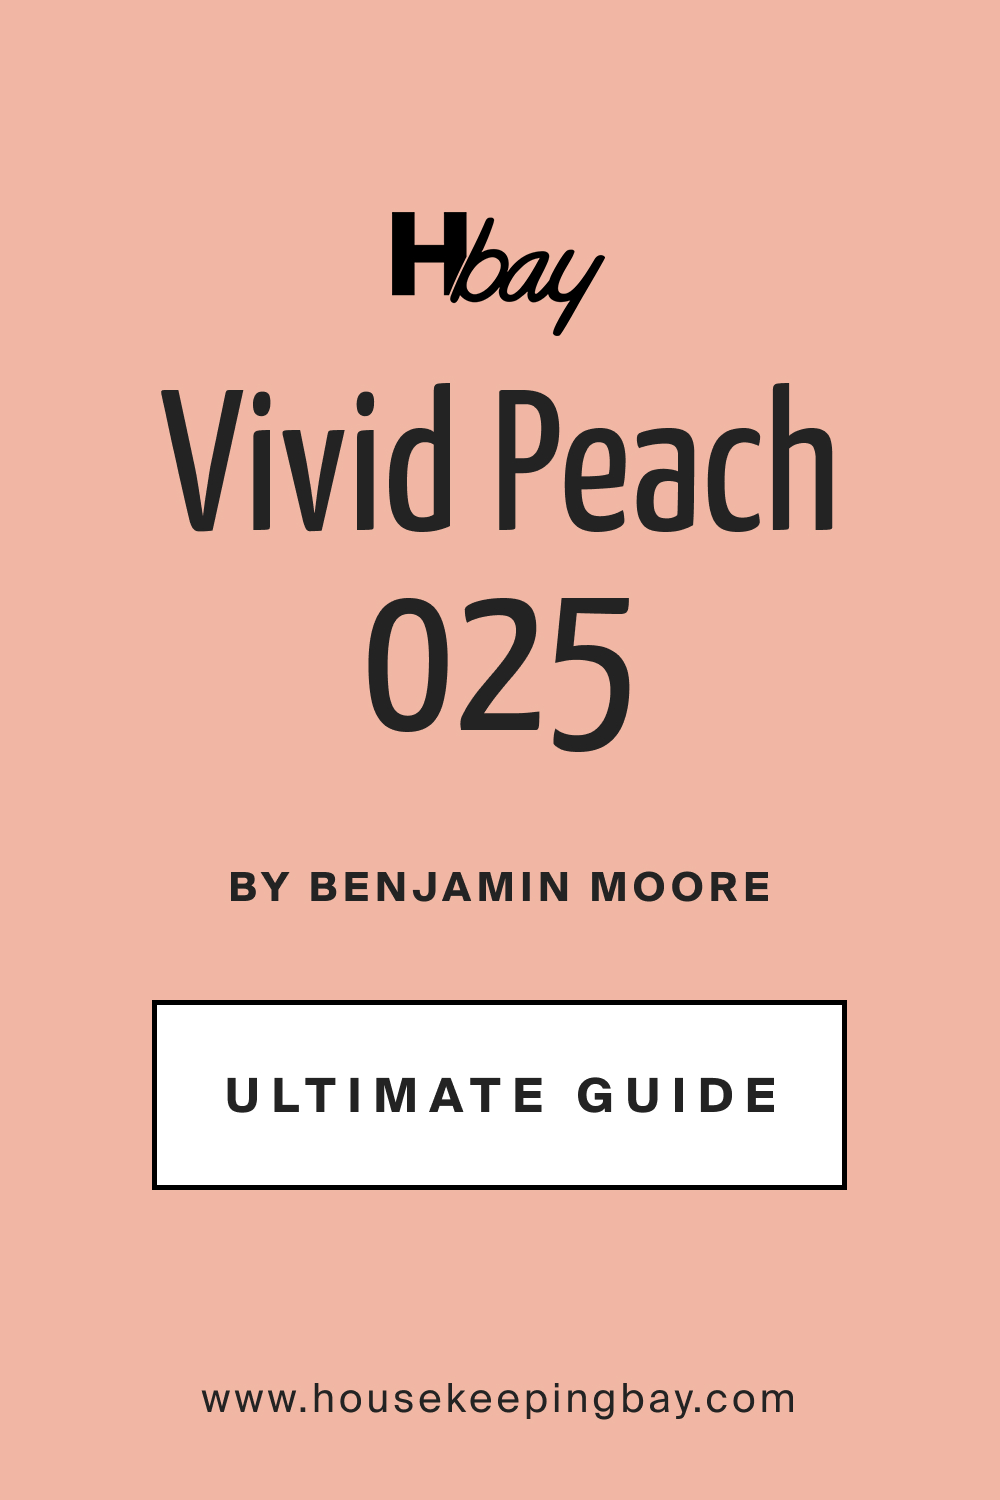 Vivid Peach 025 by Benjamin Moore Ultimate Guide